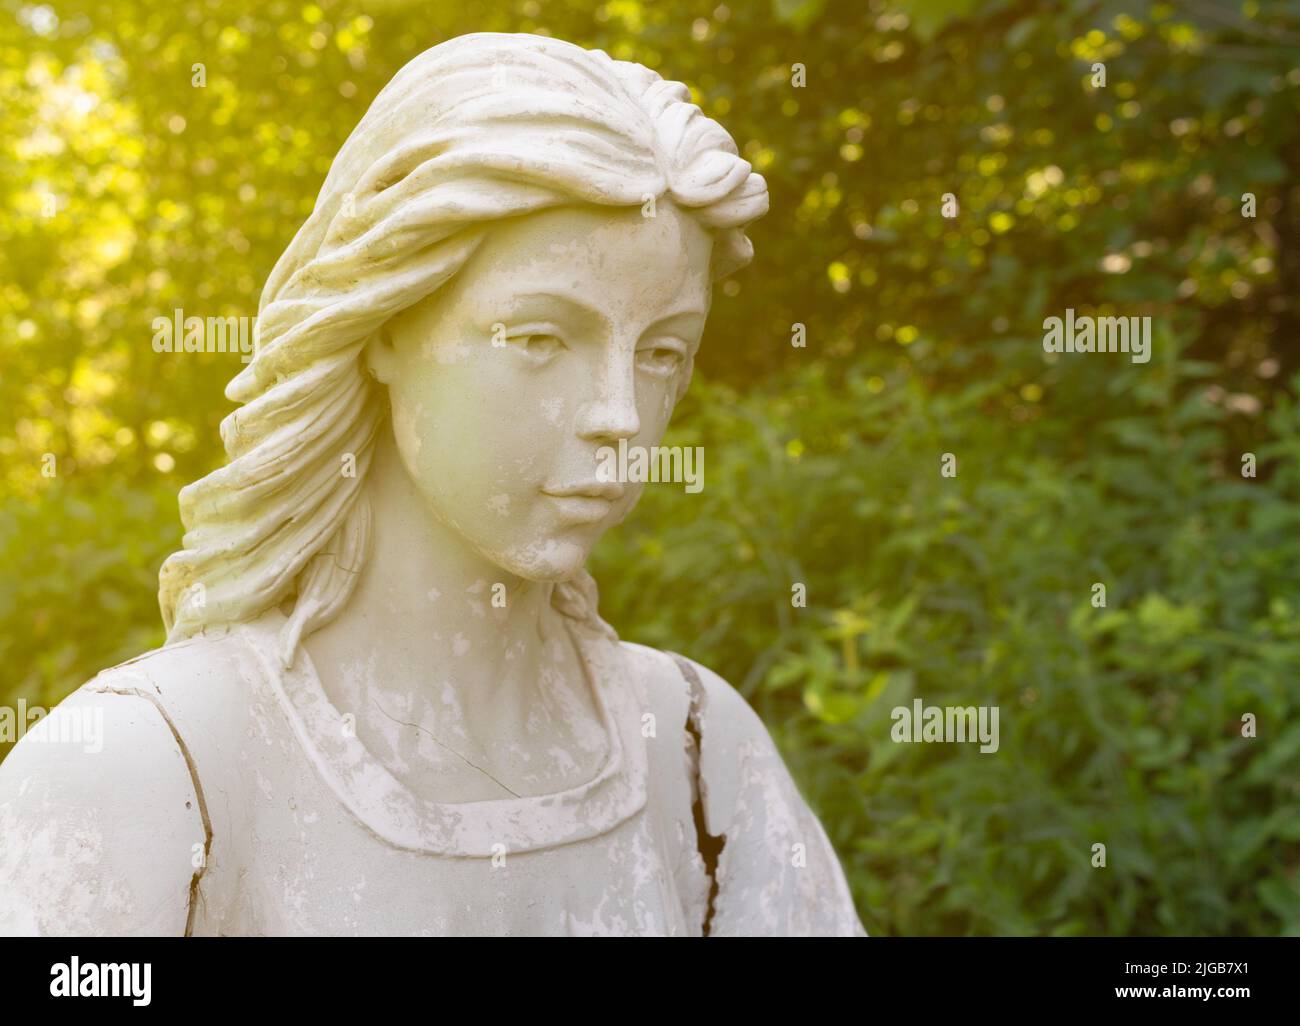 Angel statue headshot portrait with light flare Stock Photo